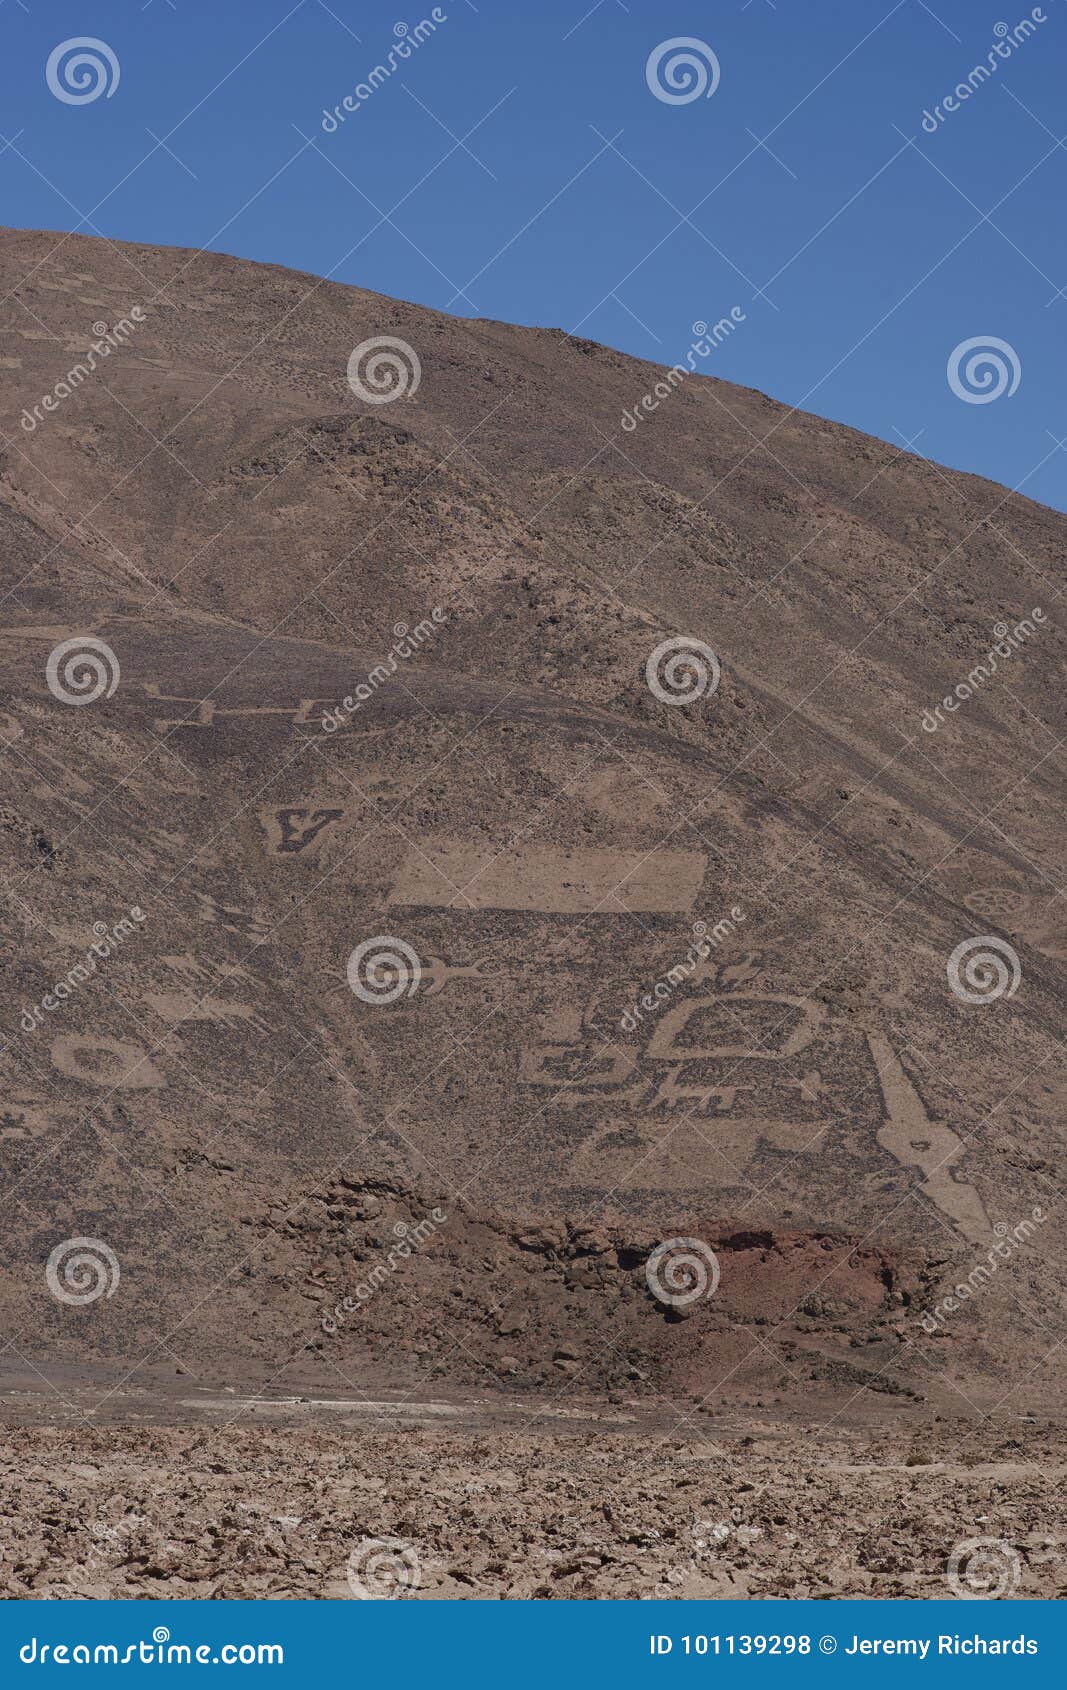 petroglyphs at cerro pintados, atacama desert, chile